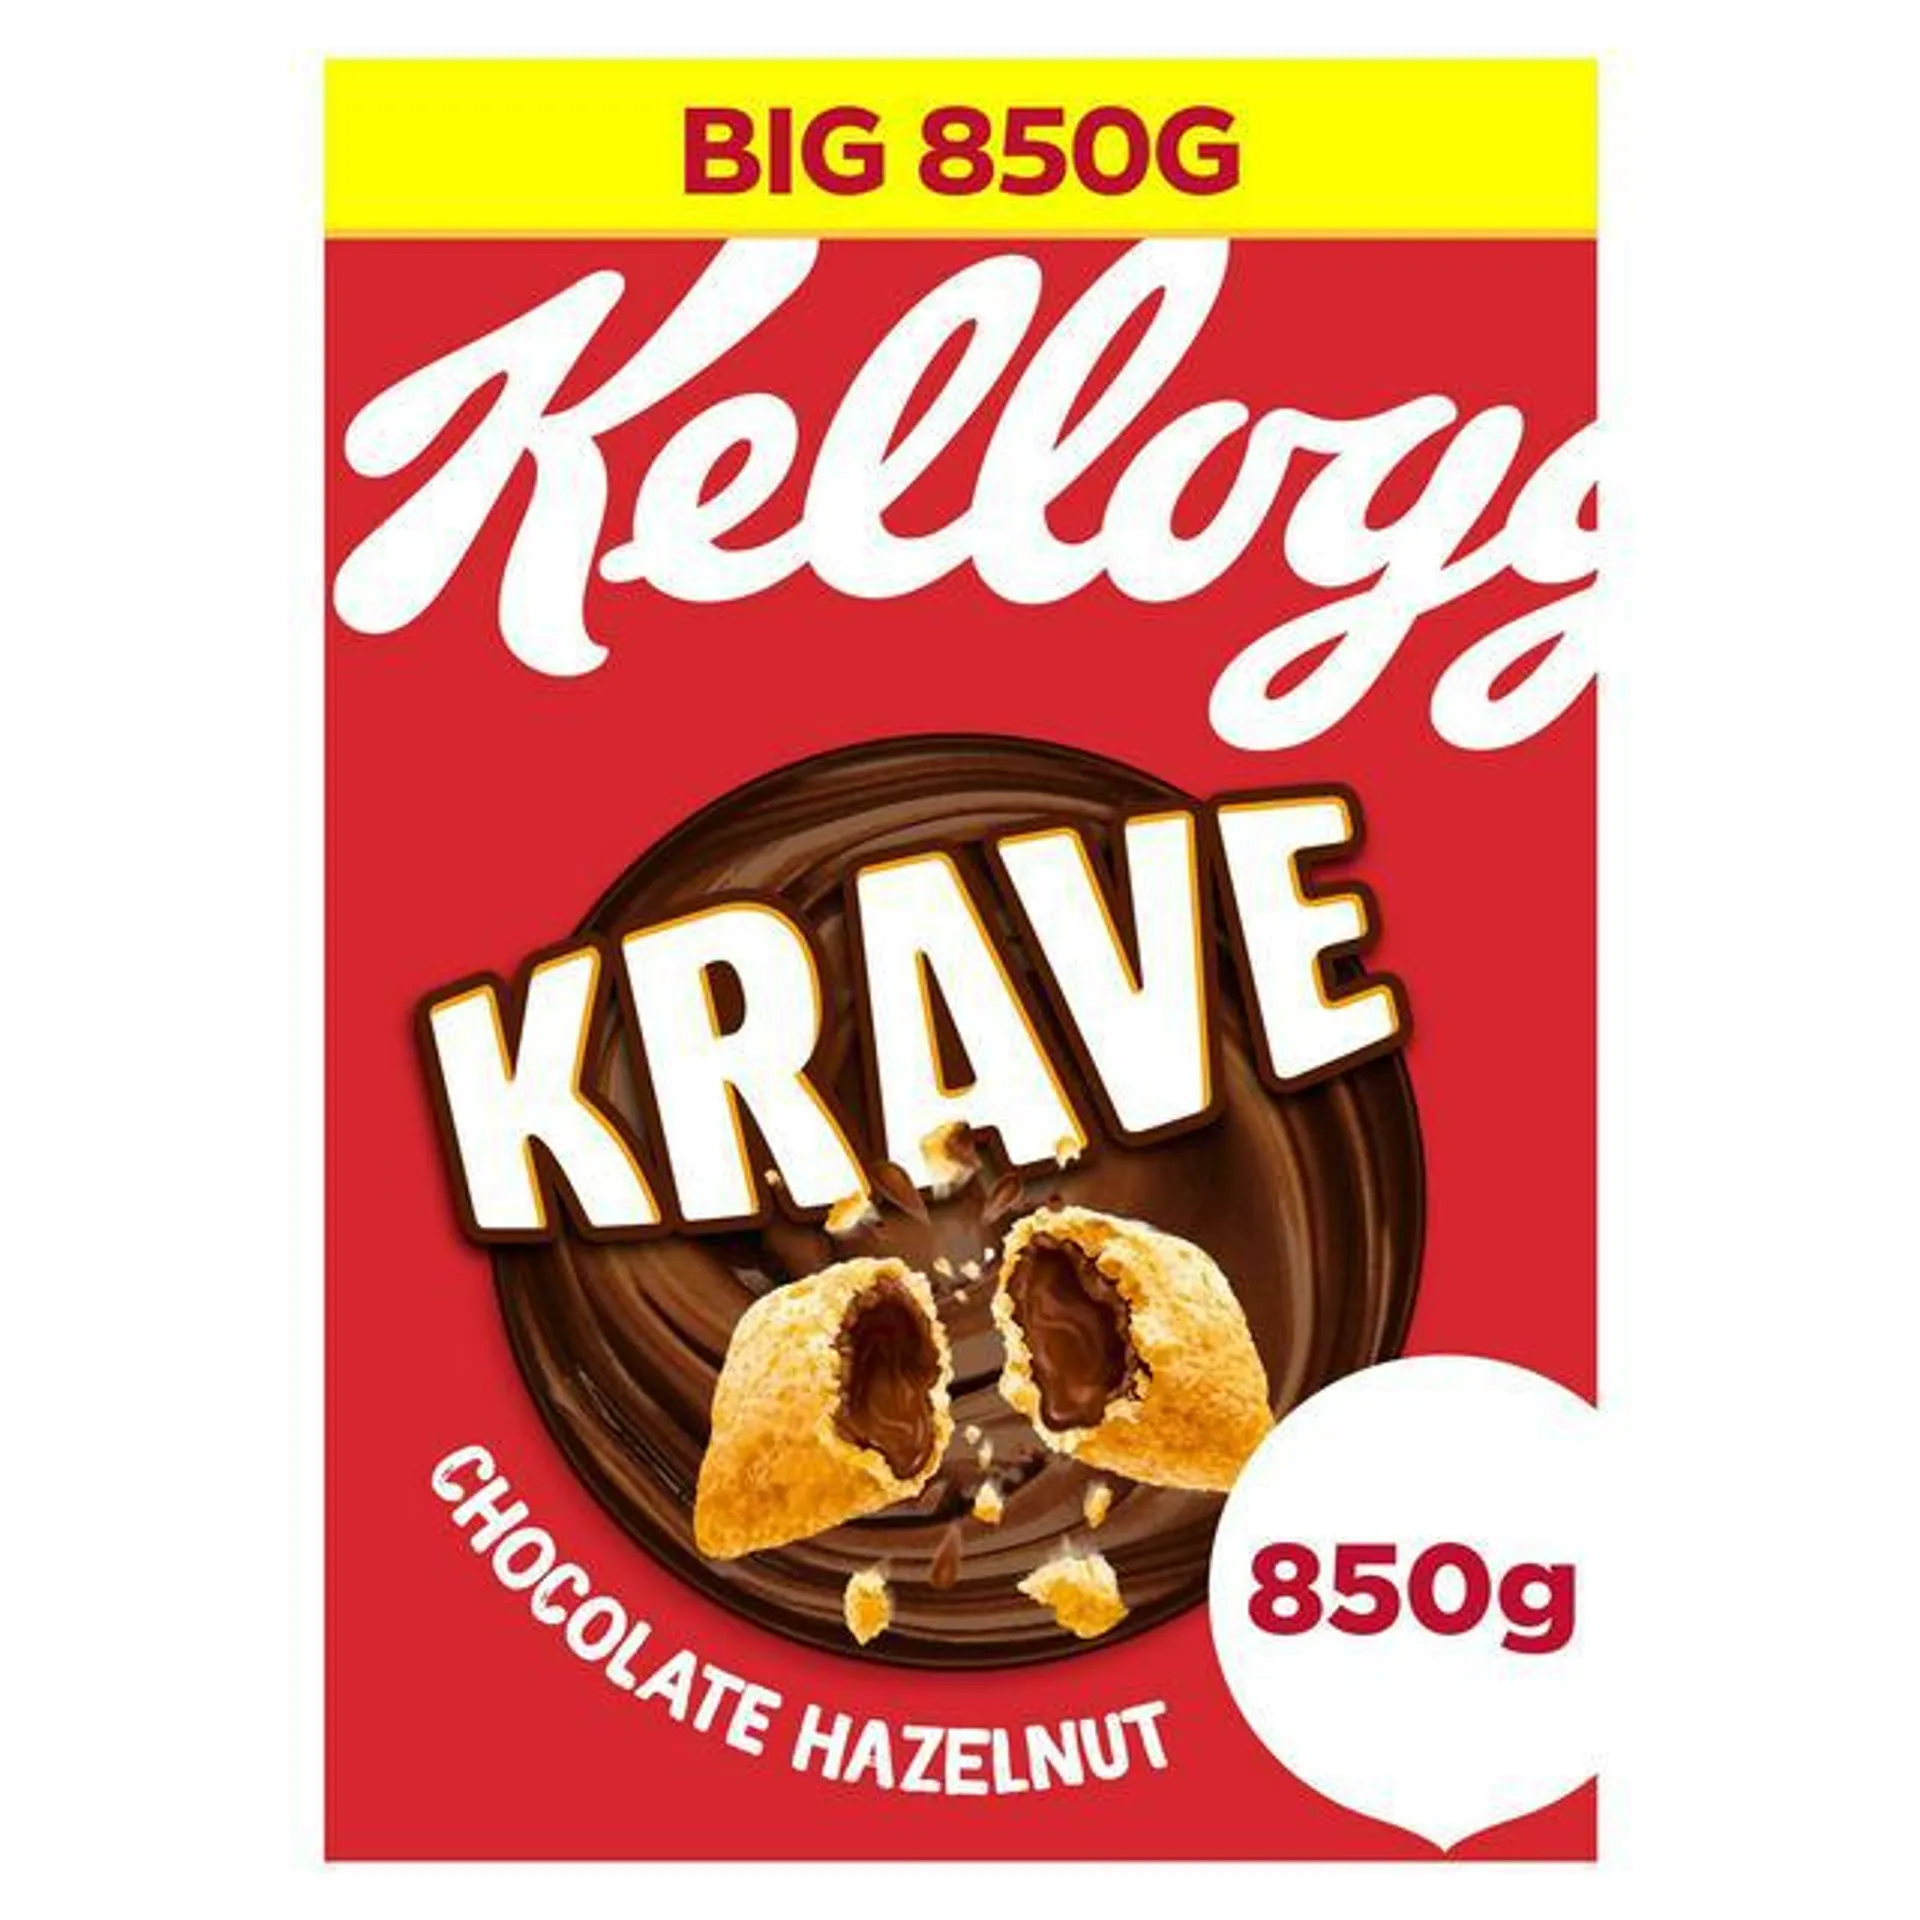 Kellogg's Krave Chocolate Hazelnut 850g